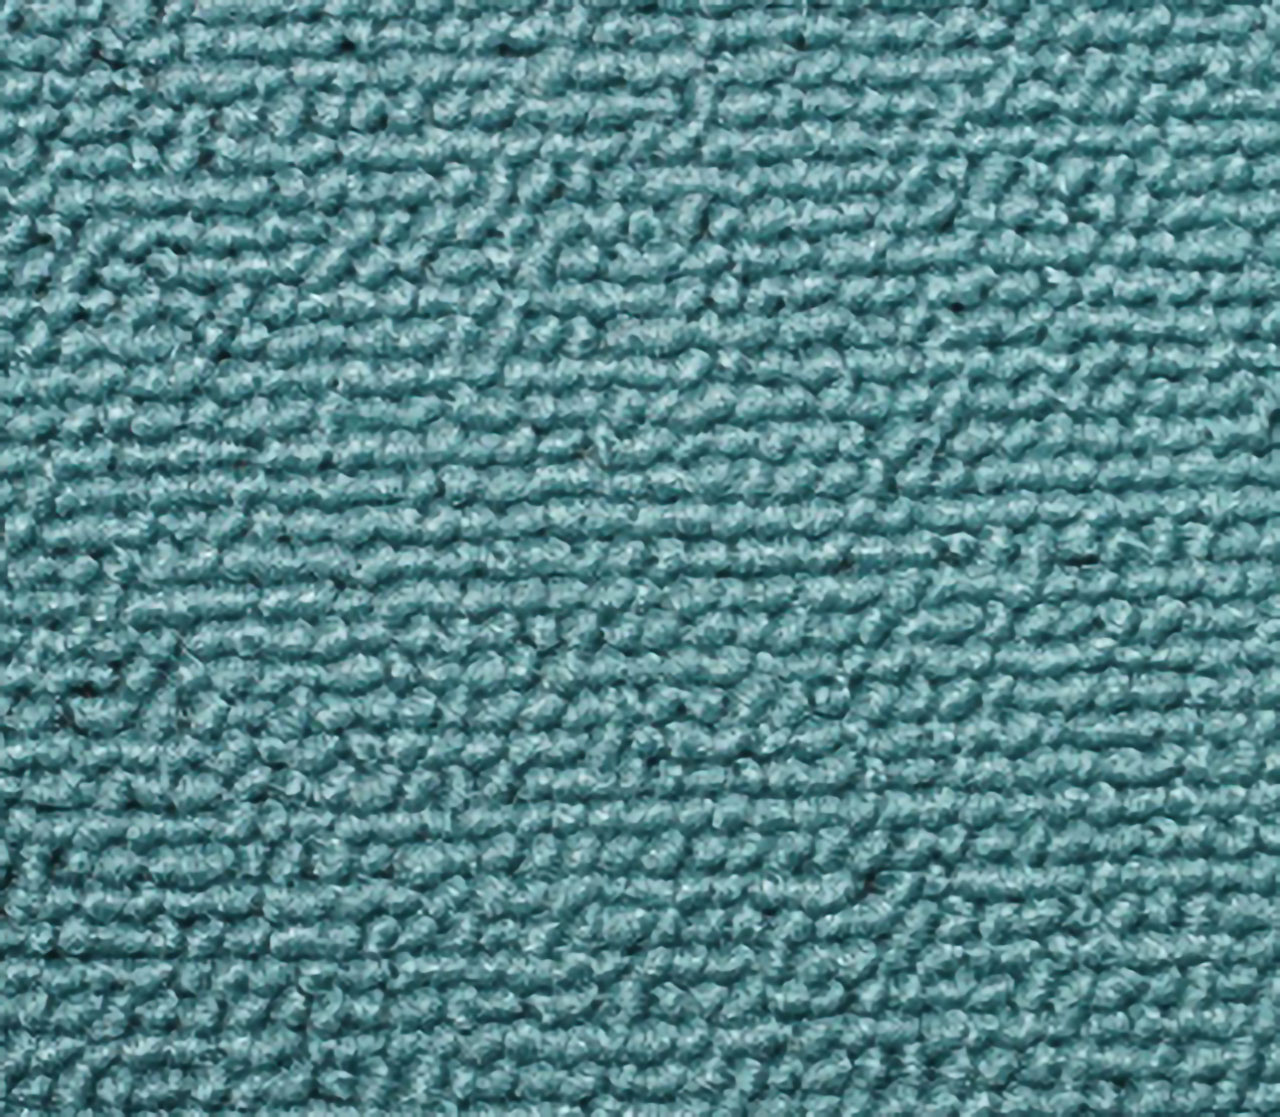 Holden Standard EJ Standard Ute B69 Geisha Turquoise Carpet (Image 1 of 1)